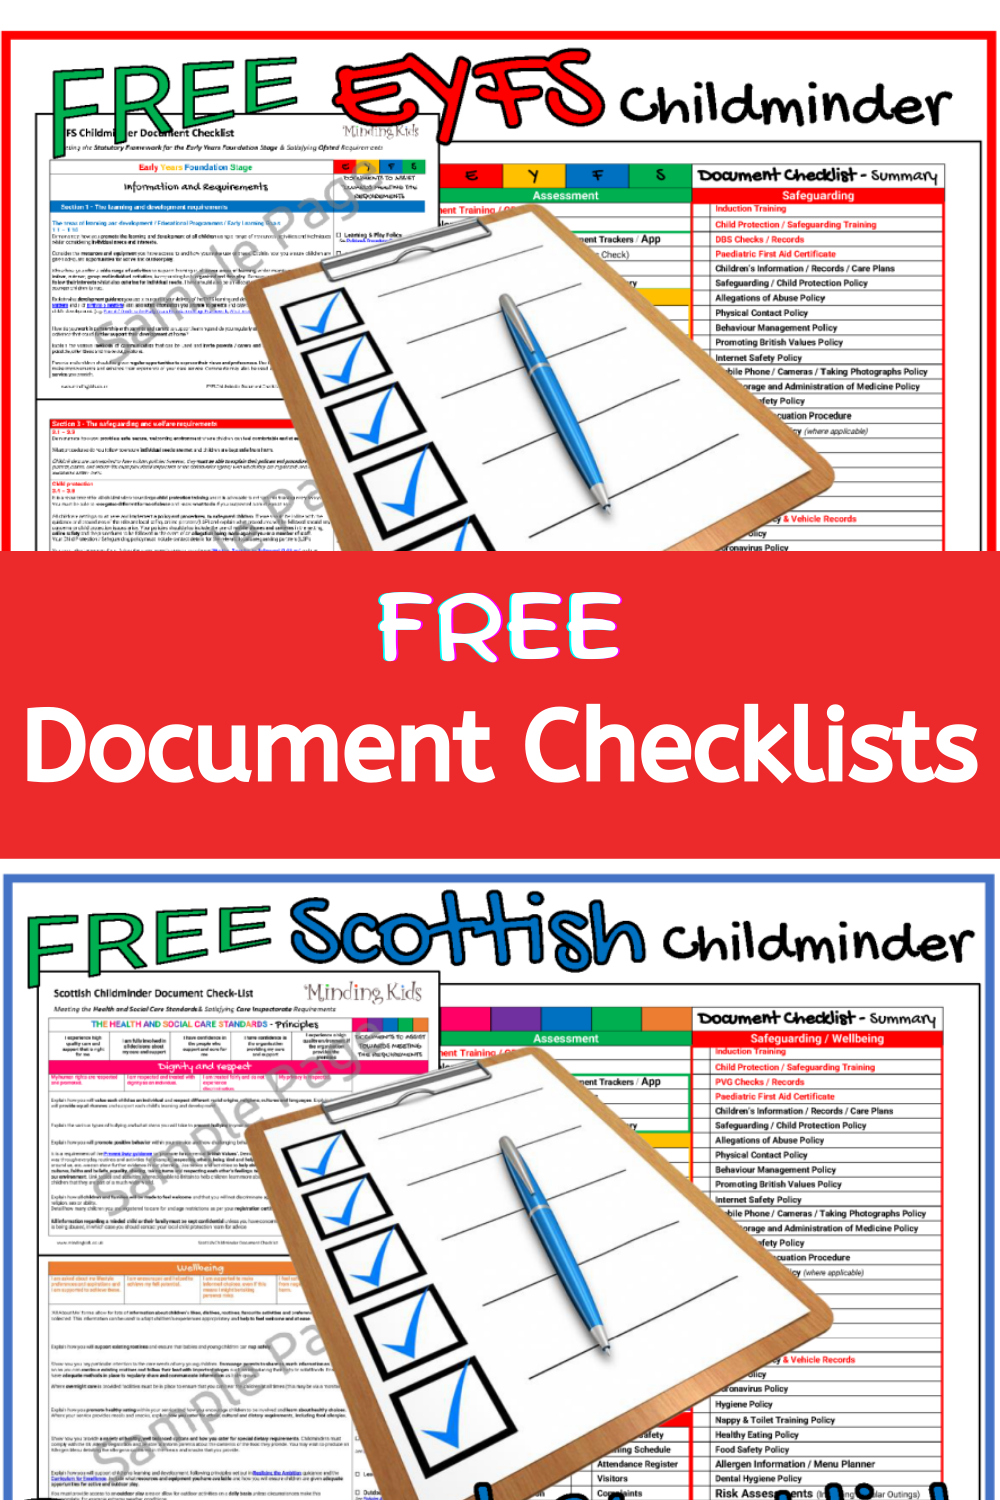 FREE Document Checklists